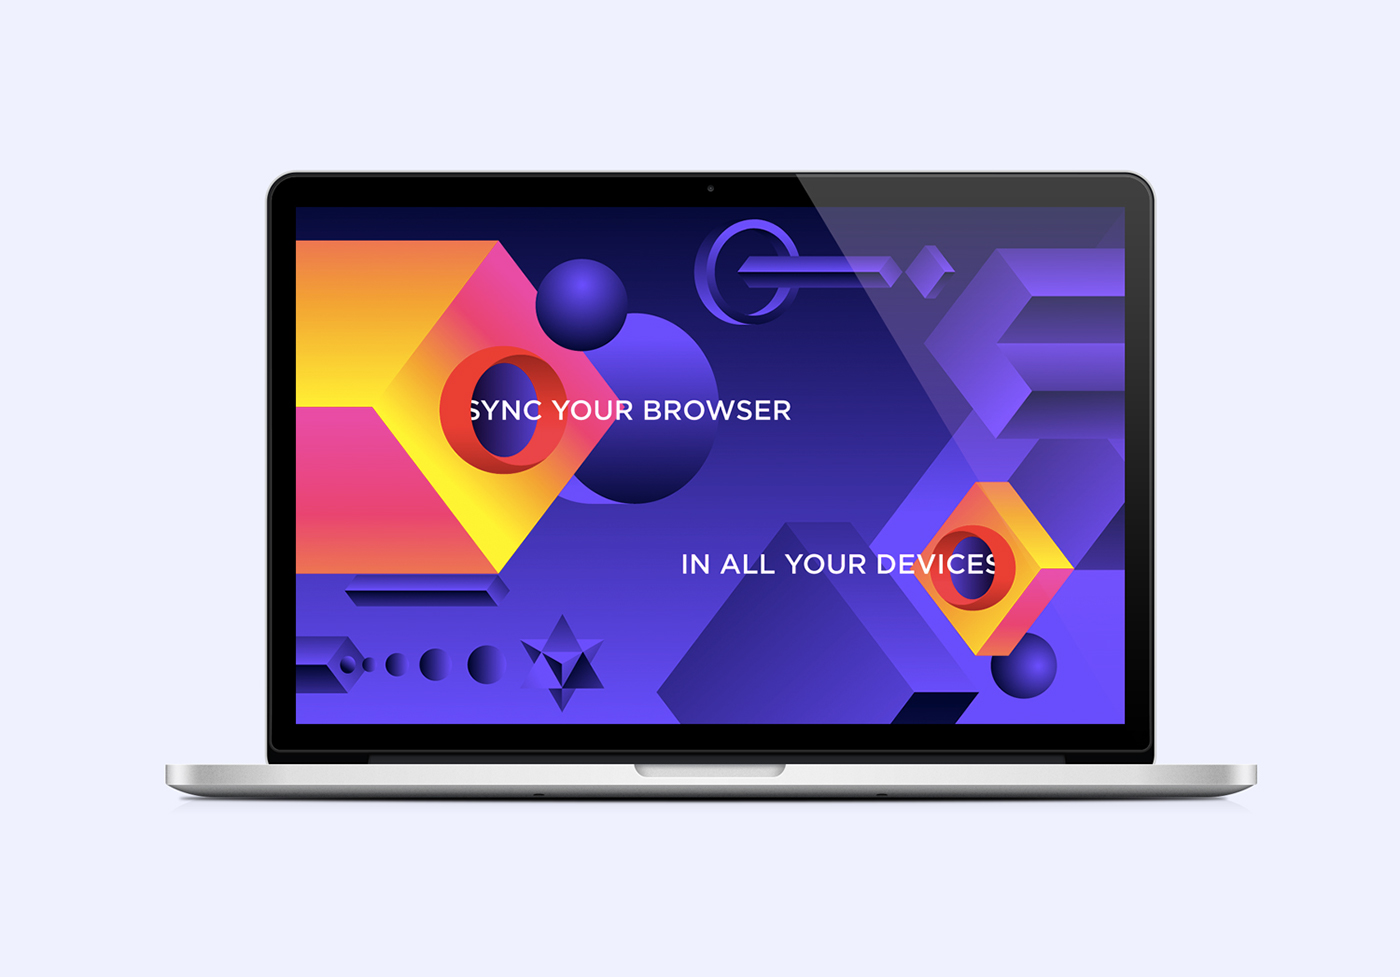 opera universe geometry gradient bold transform icons logos colorful Web